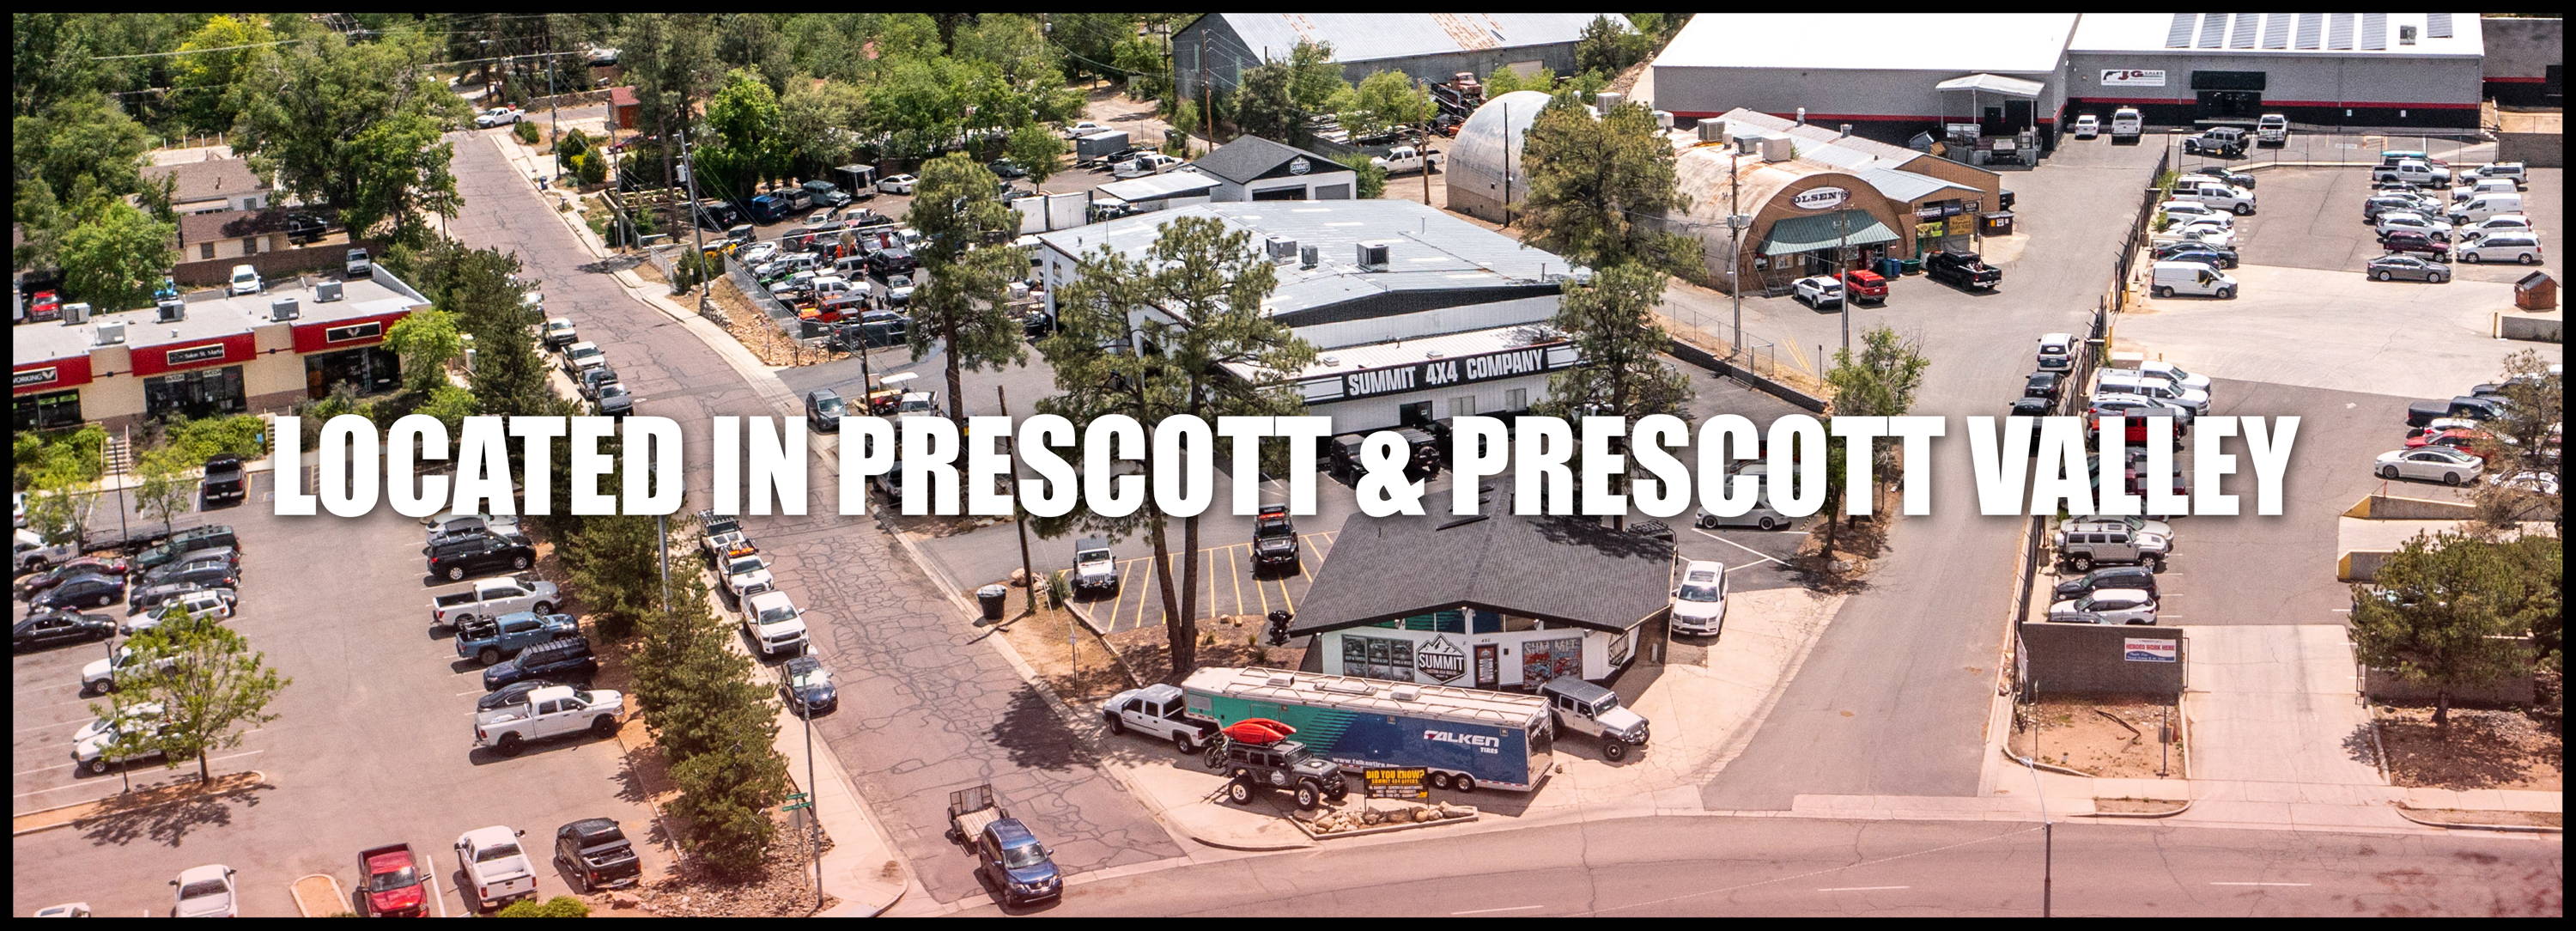 Summit 4x4 Company is located in both Prescott and Prescott Valley Arizona